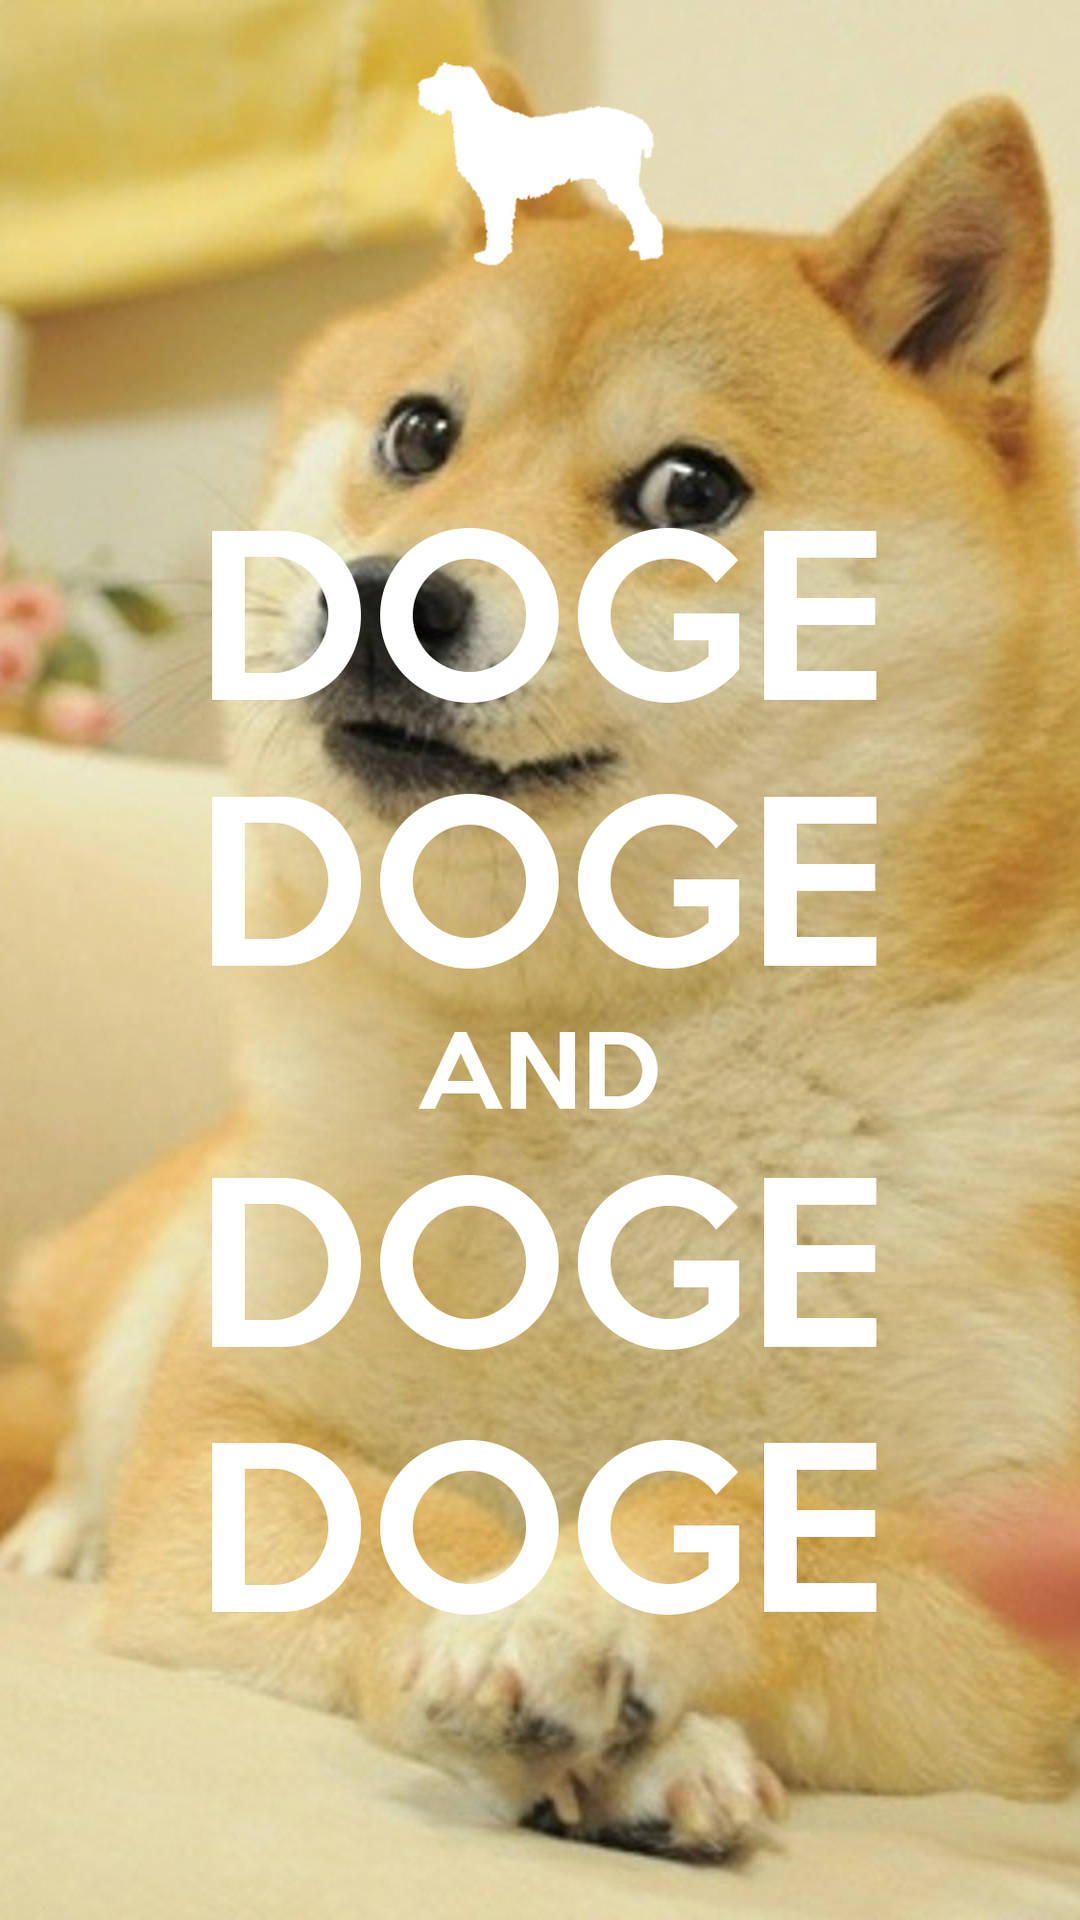 Doge Meme Inspirational Quote Wallpaper